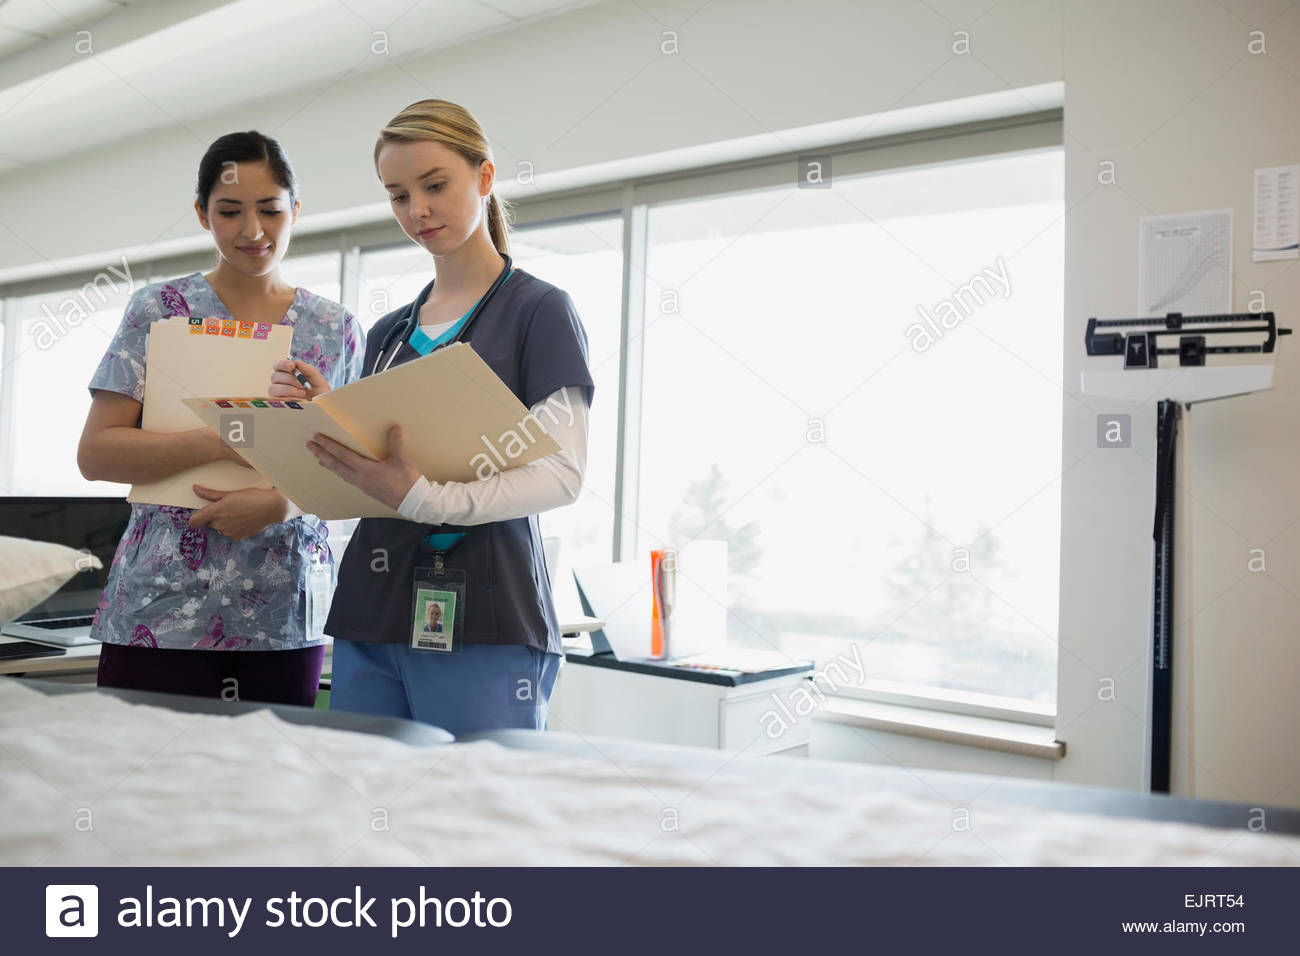 Nurses reviewing medical charts in examination room Stock Photo